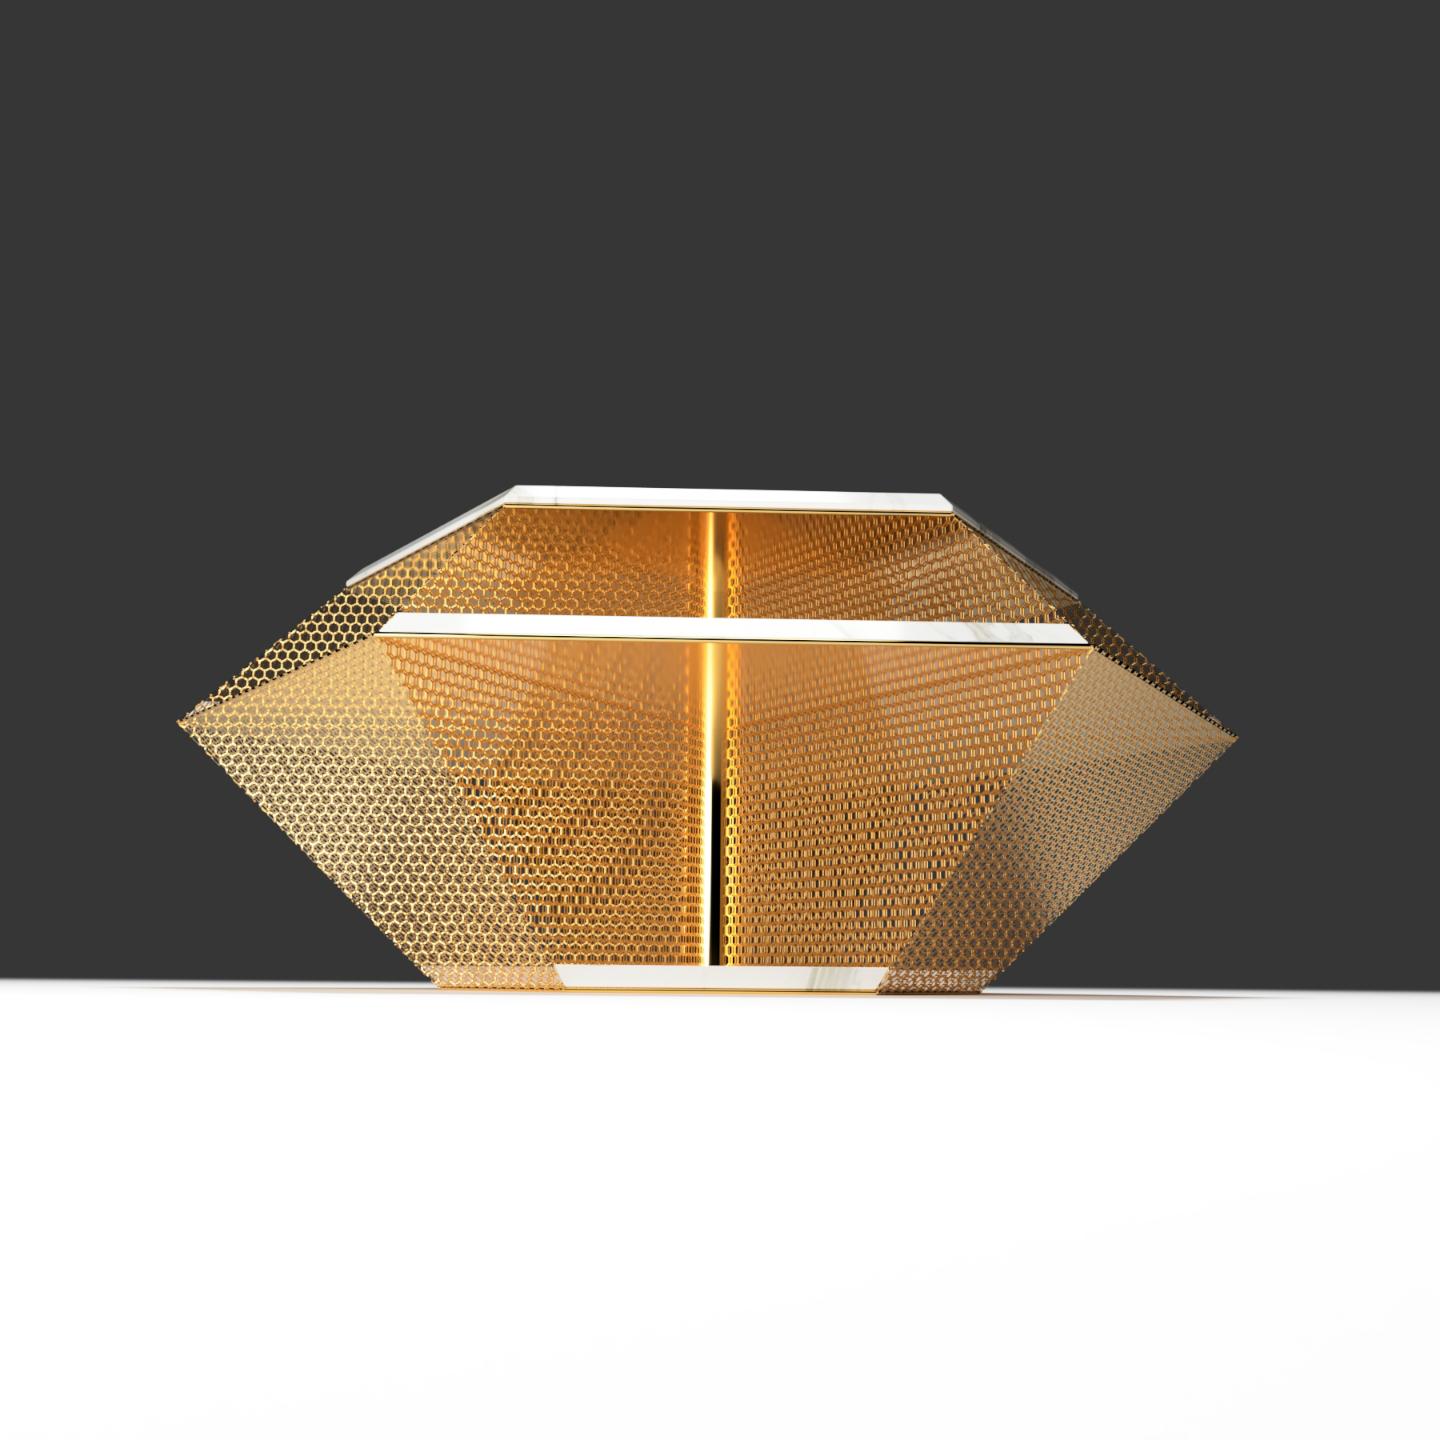 Modern Rough Diamond Center Table, 1 of 1 by Grzegorz Majka